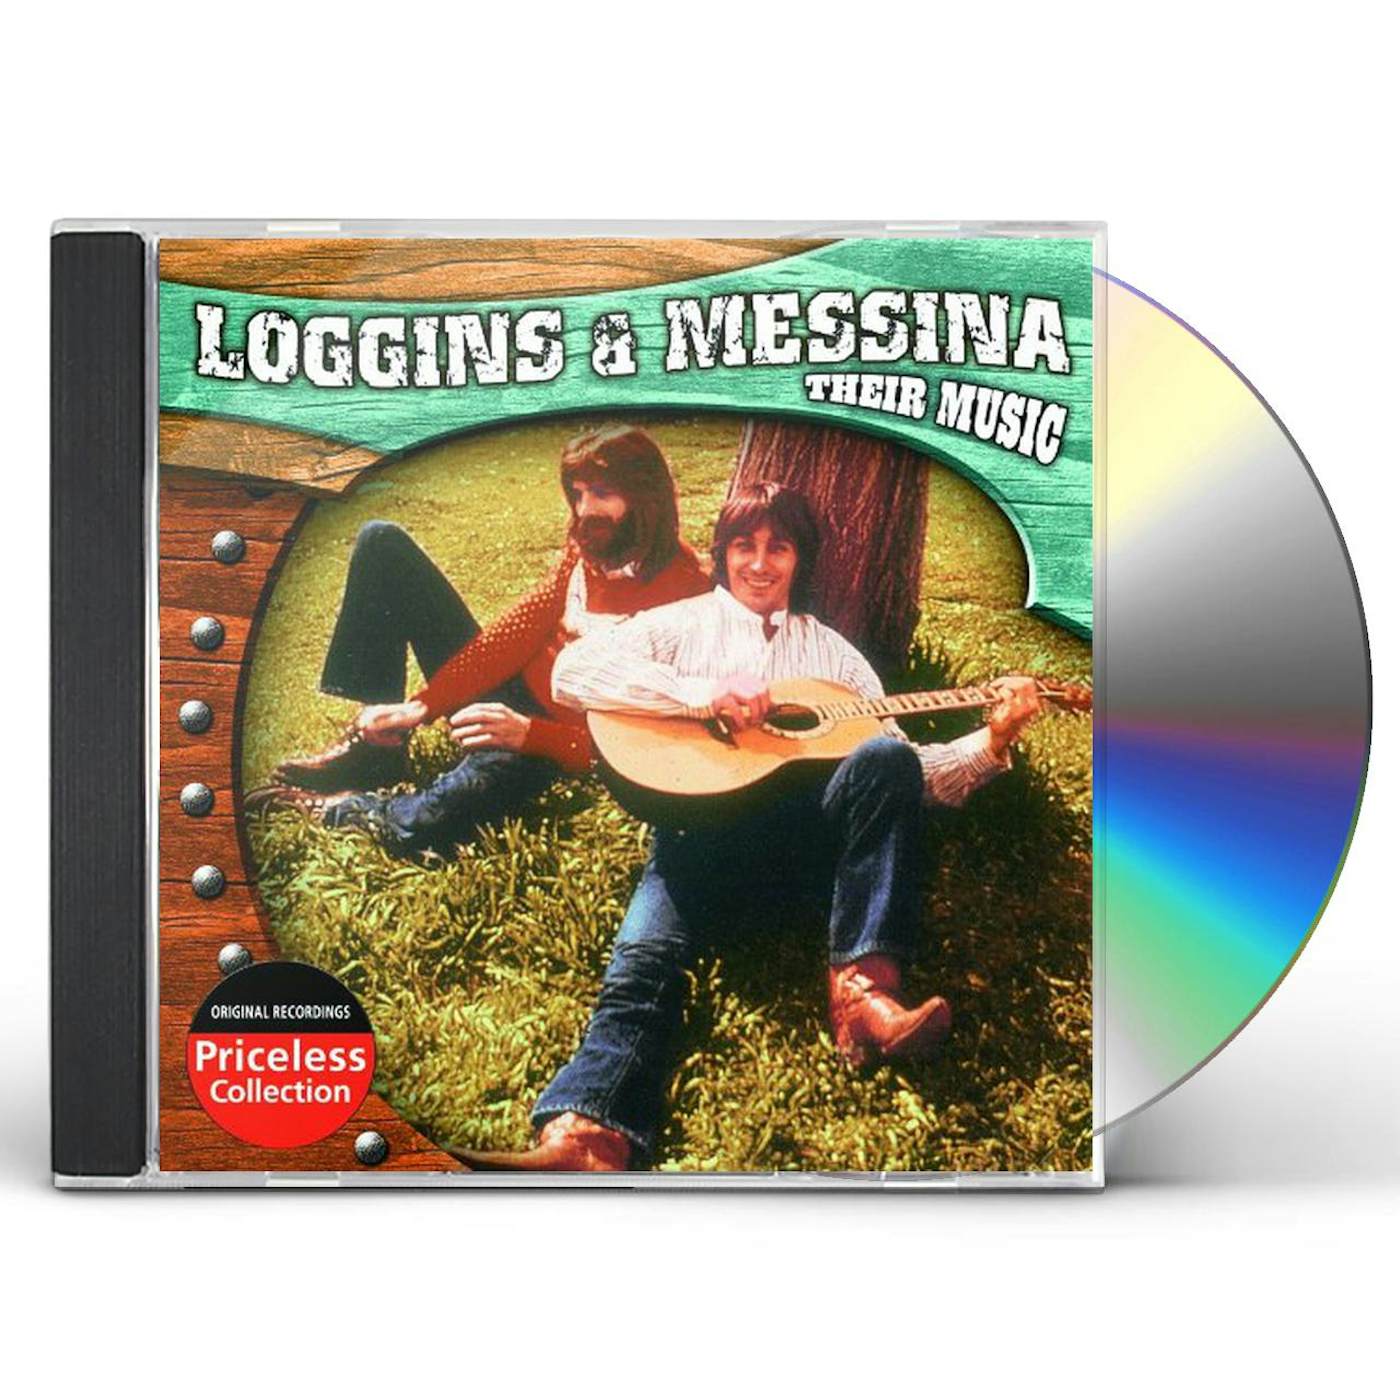 Loggins & Messina THEIR MUSIC CD